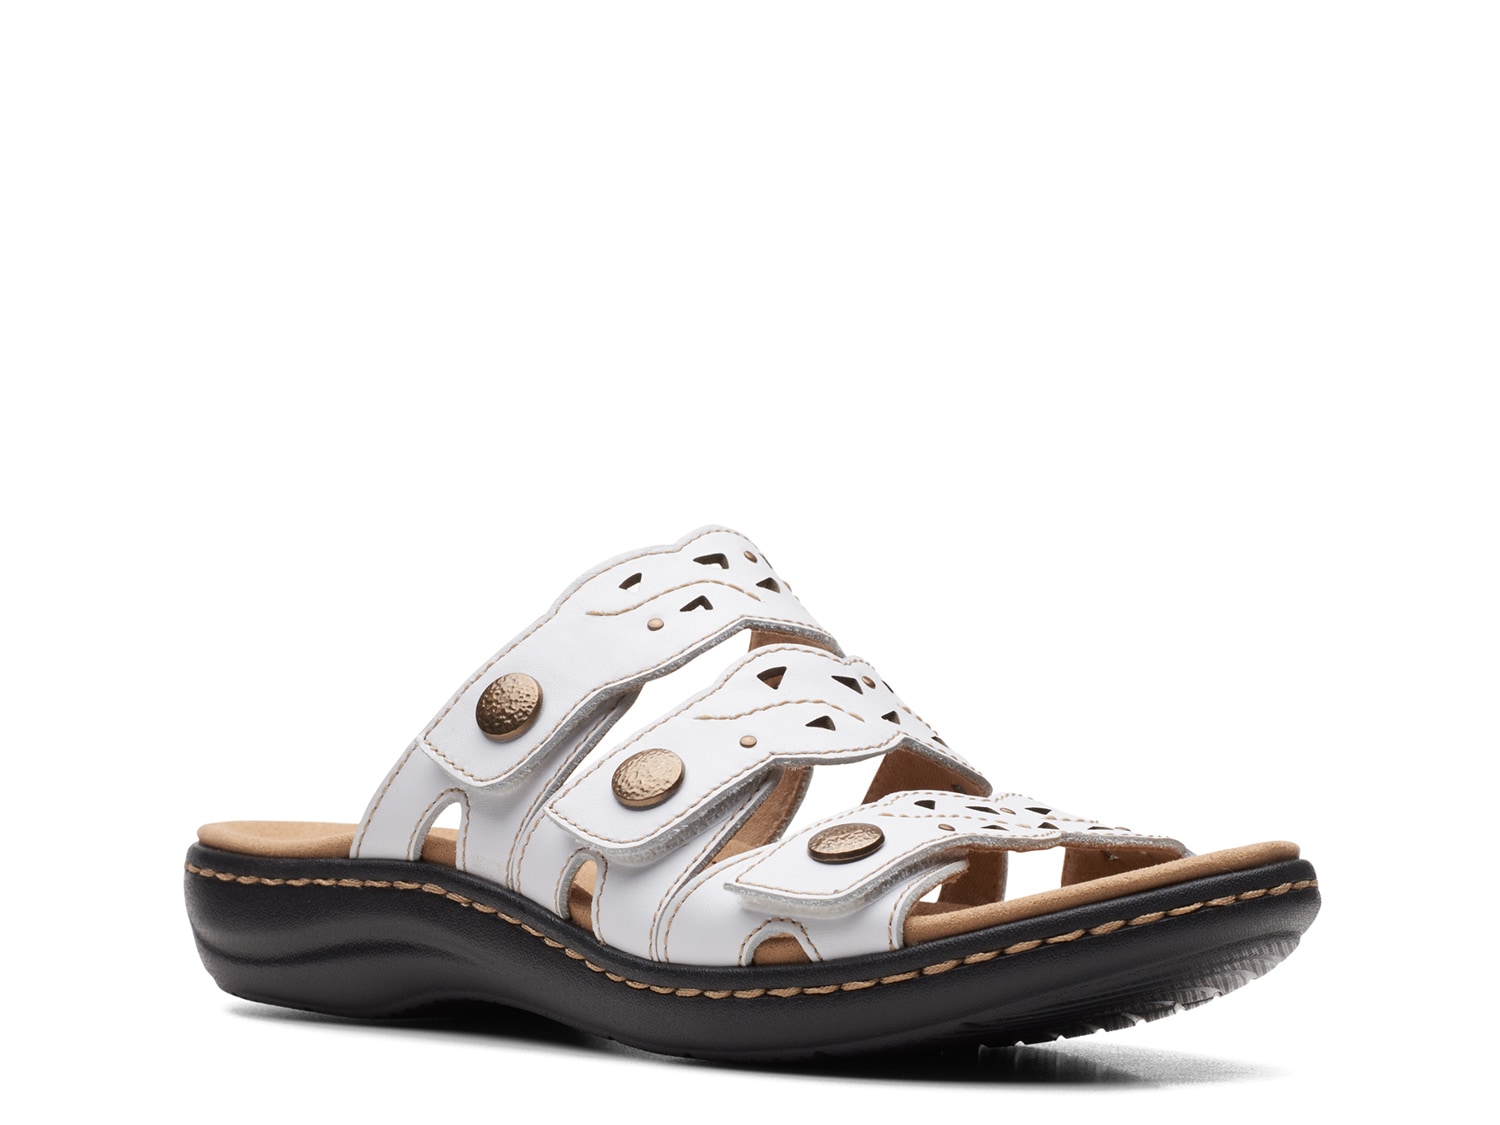 Clarks Shoes, Sandals \u0026 Boots | Slip-On 